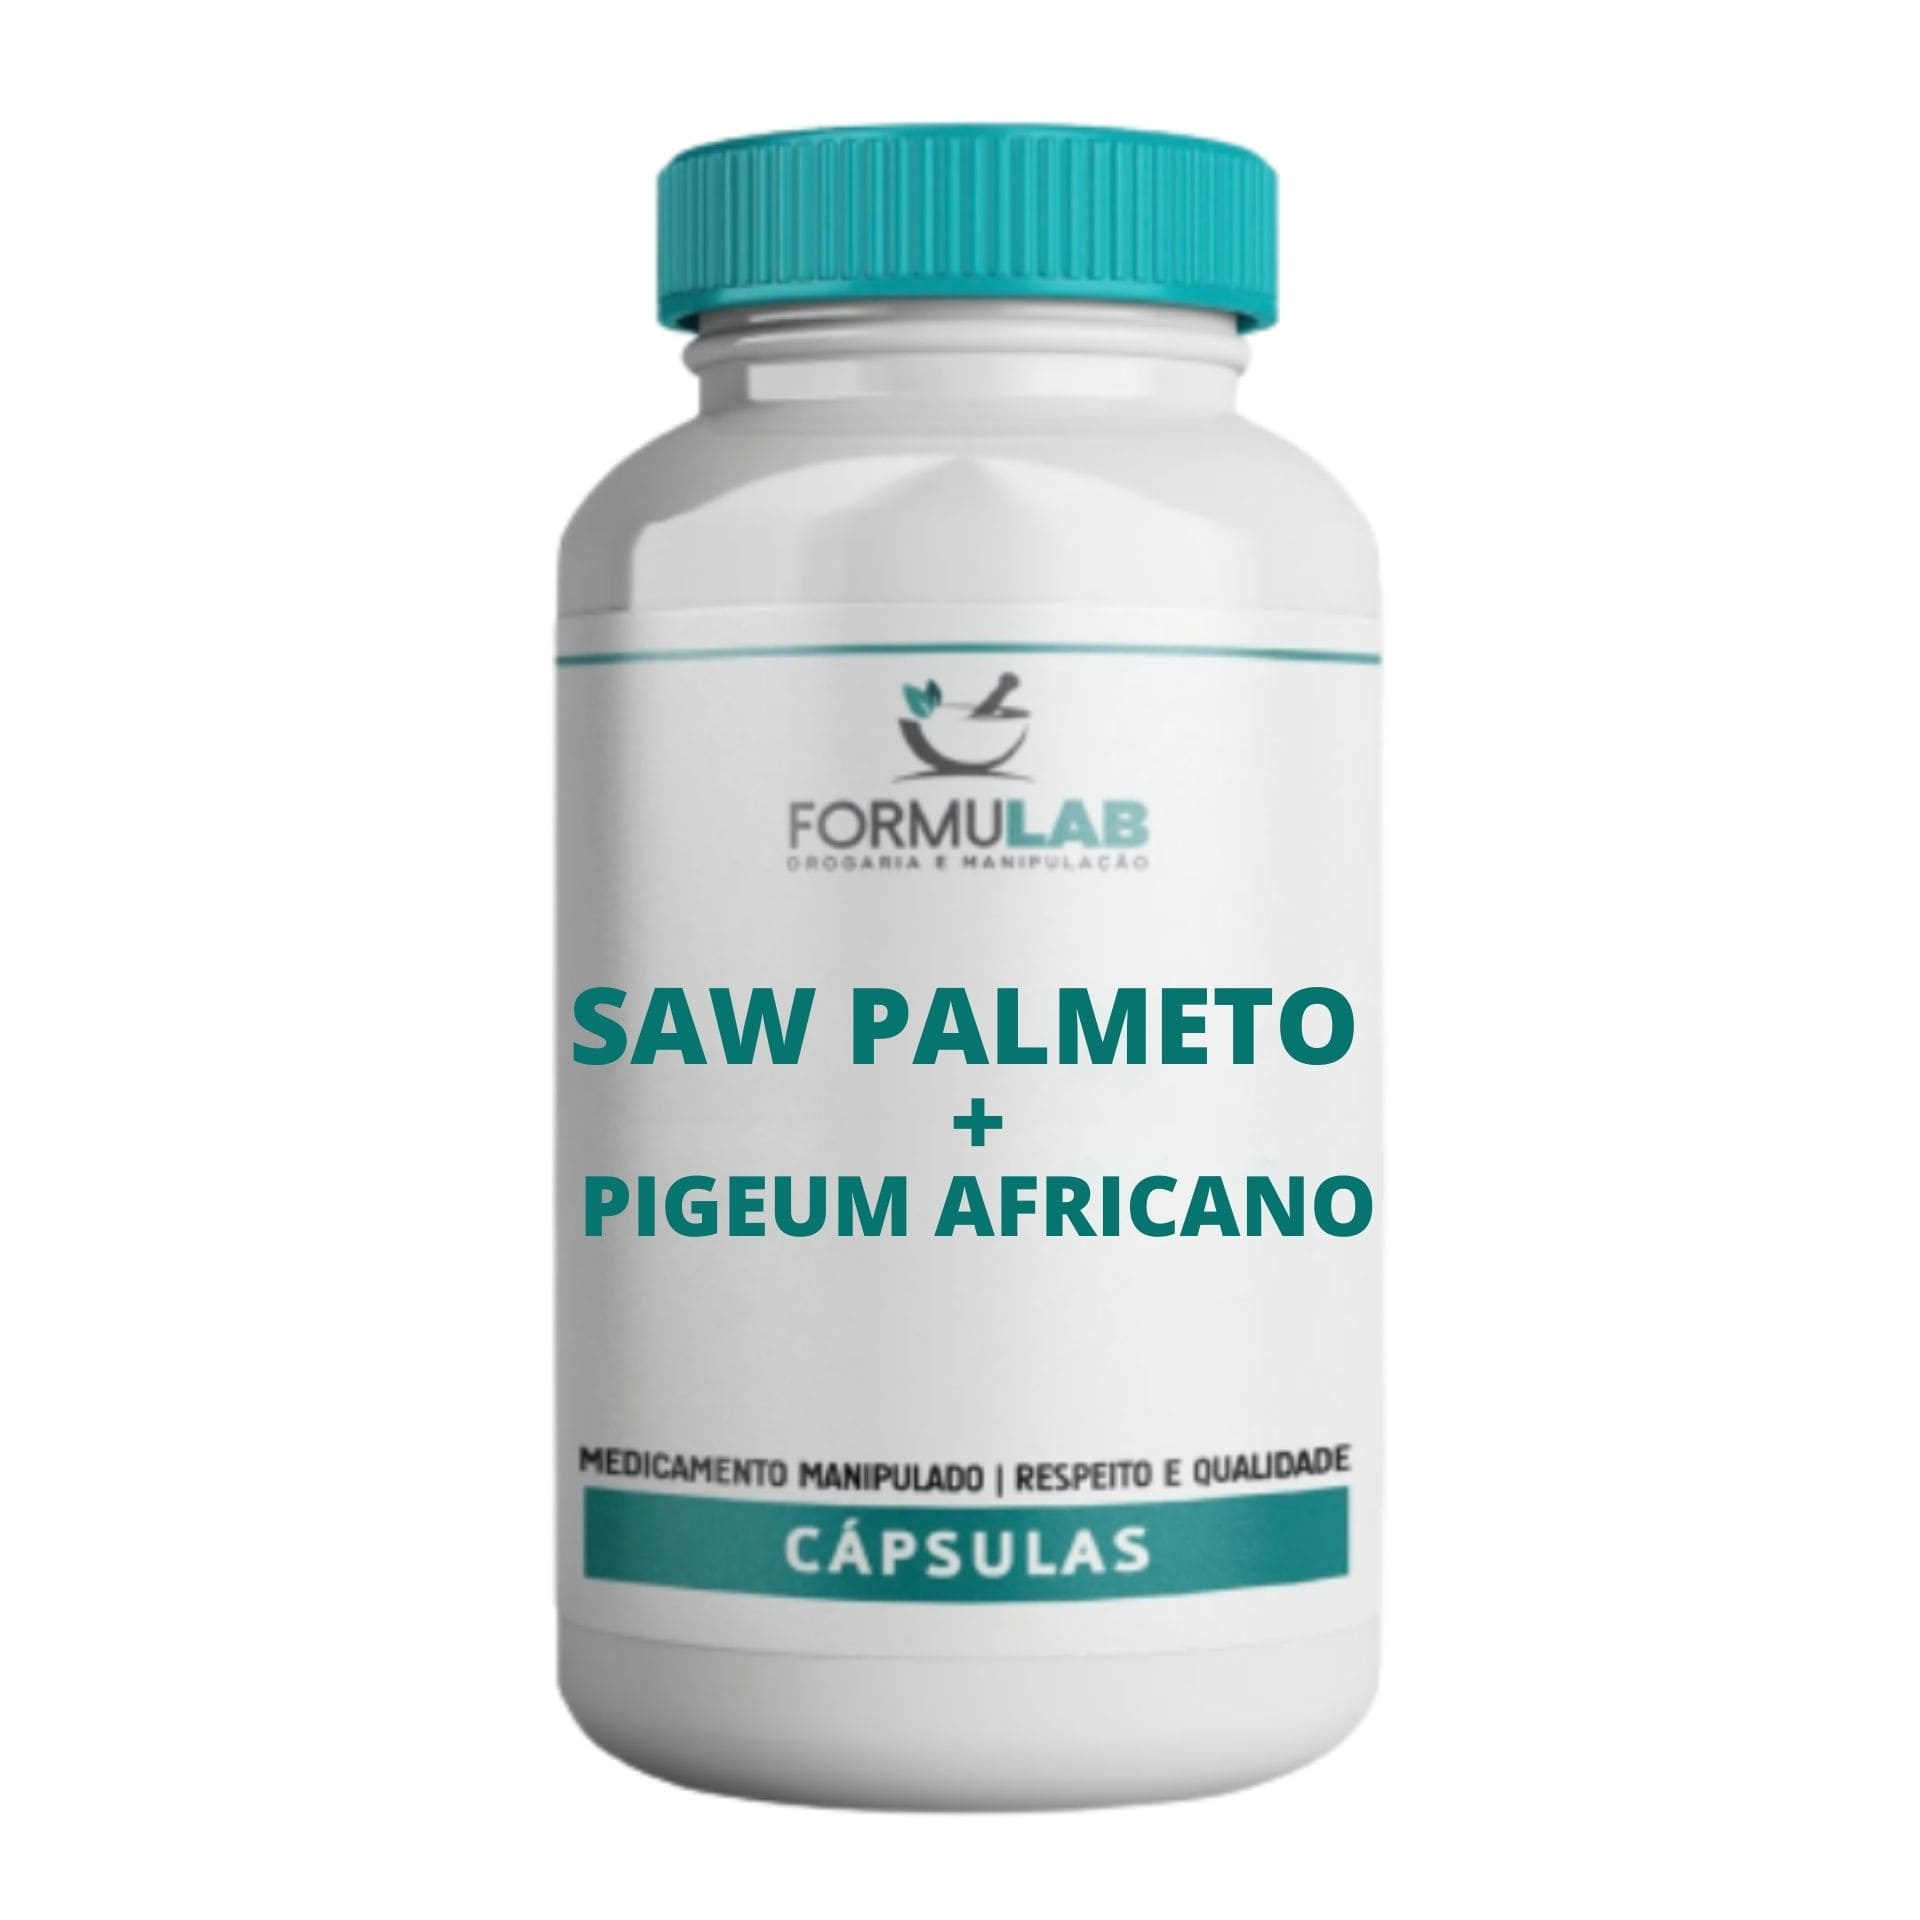 Saw Palmeto 320mg - Serenoa Repens + Pigeum Africano 100mg